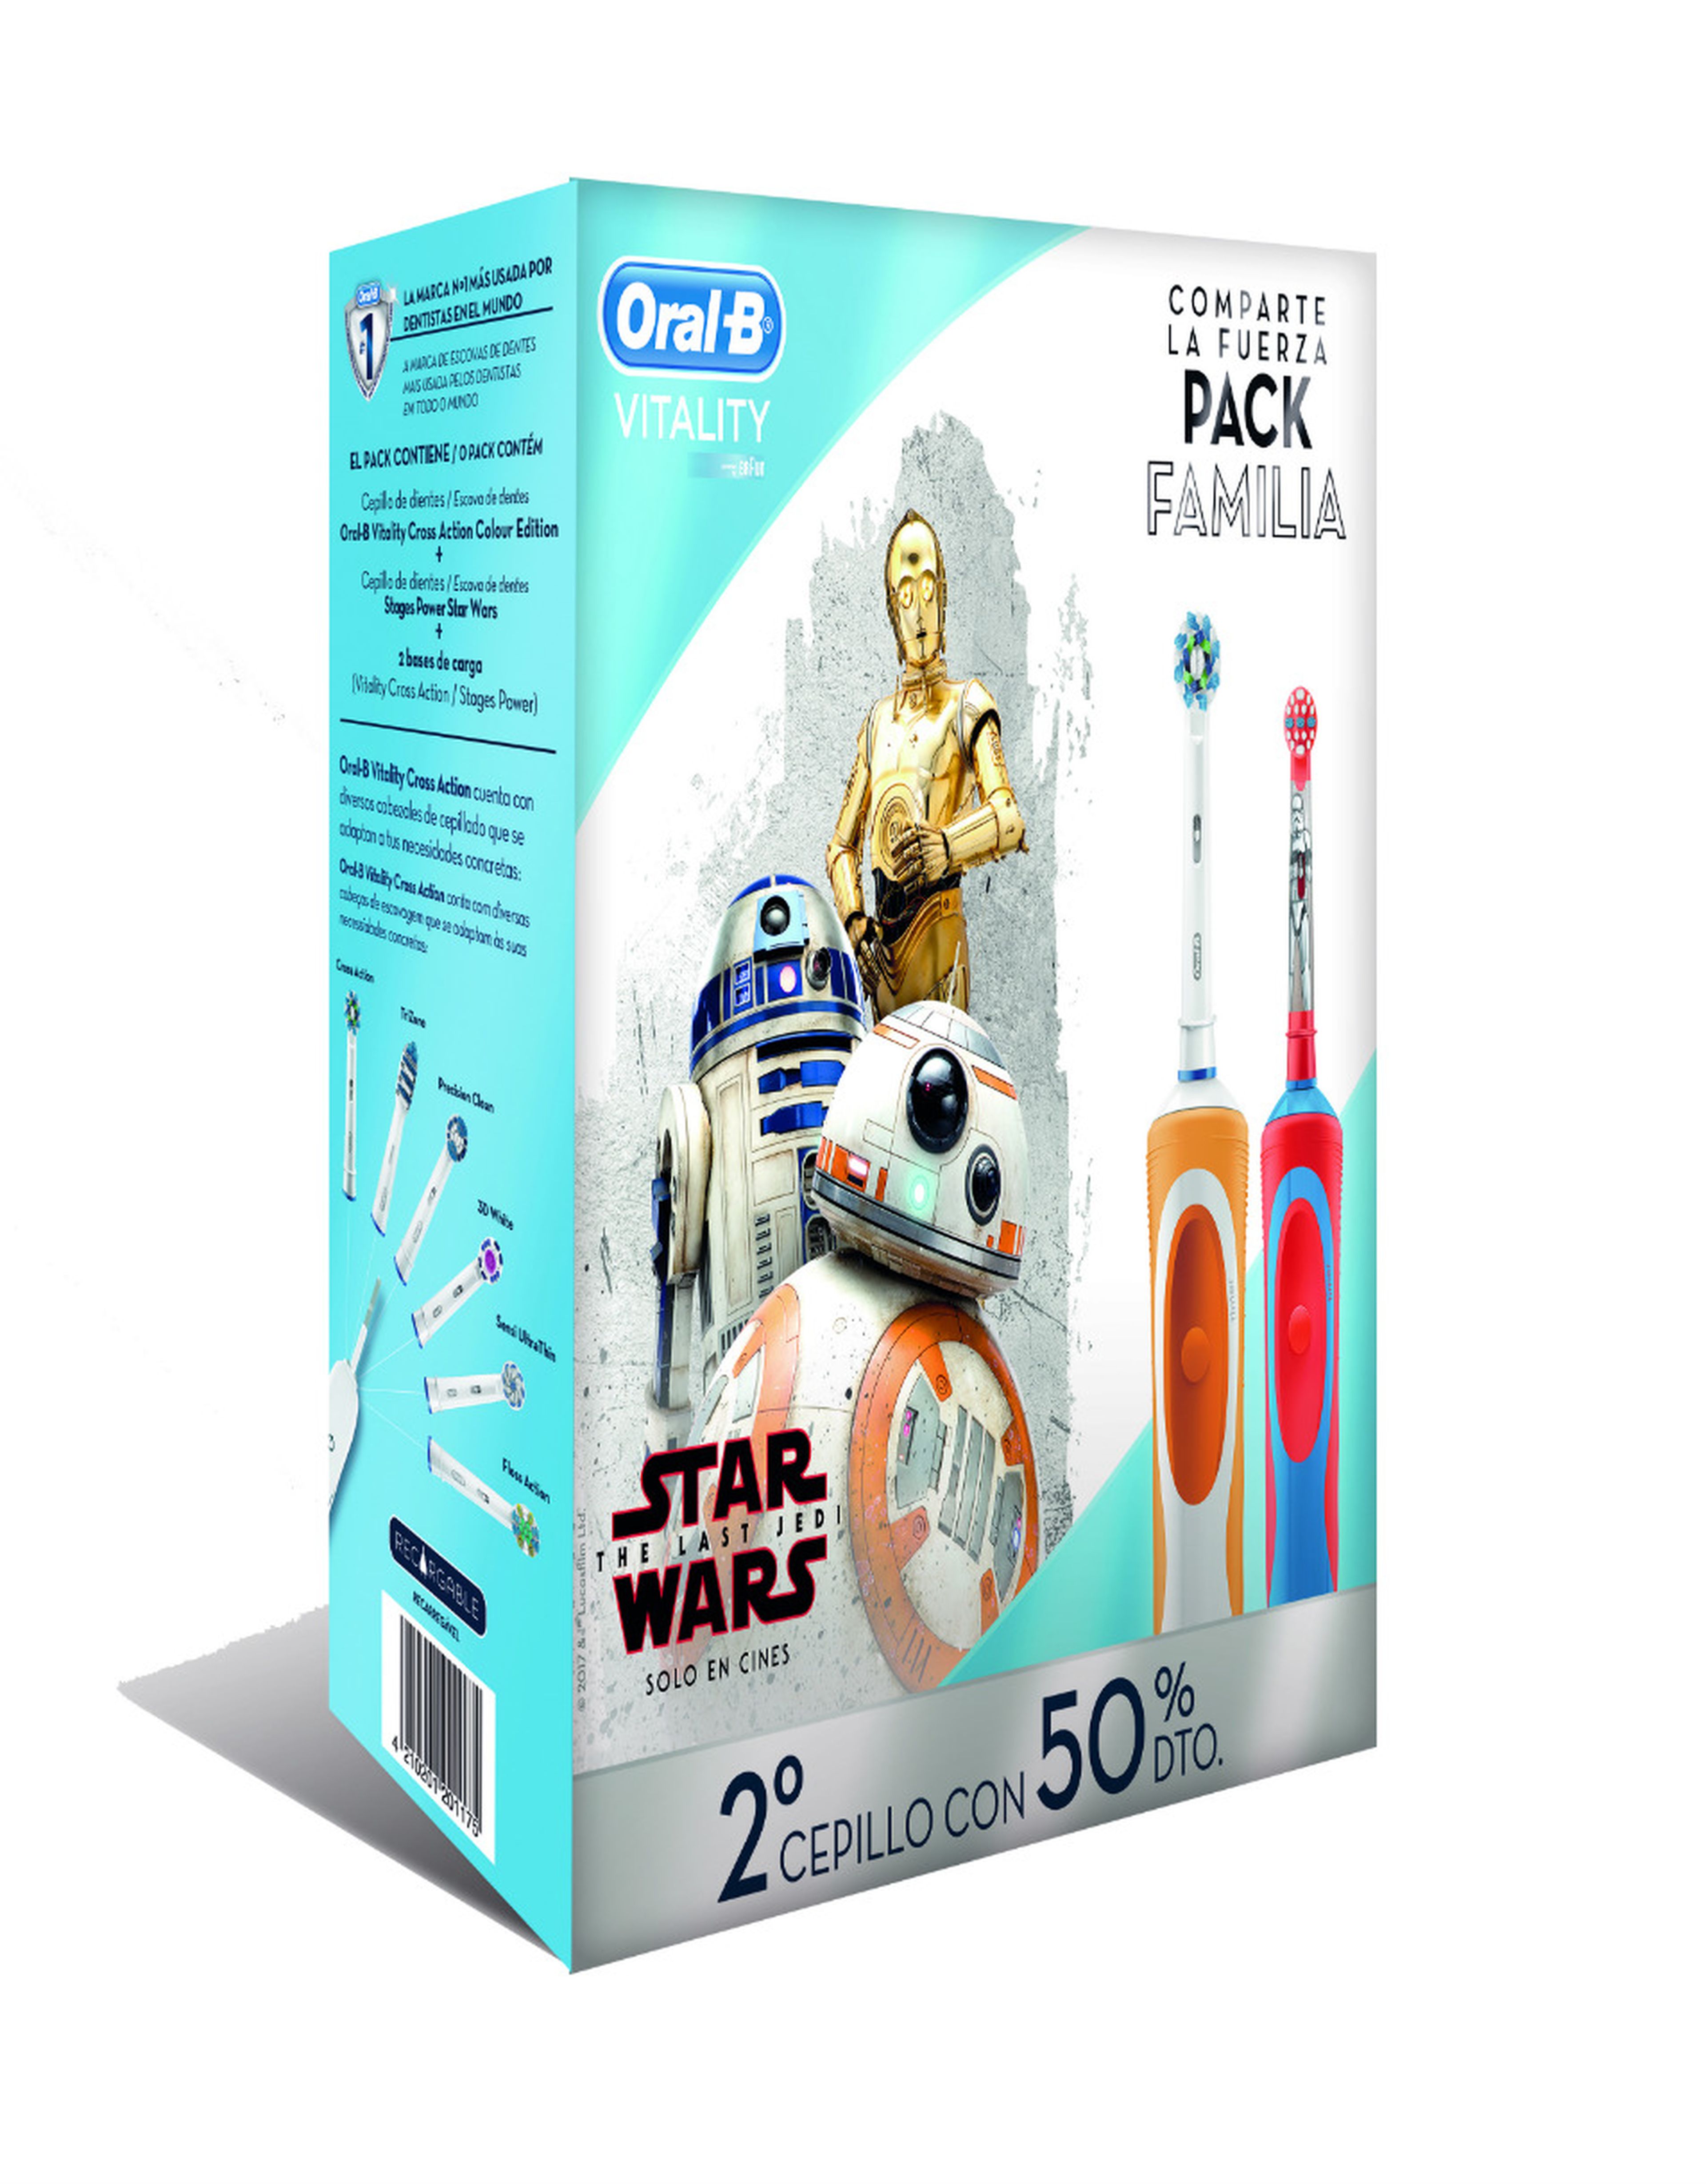 Cepillo dientes Star Wars